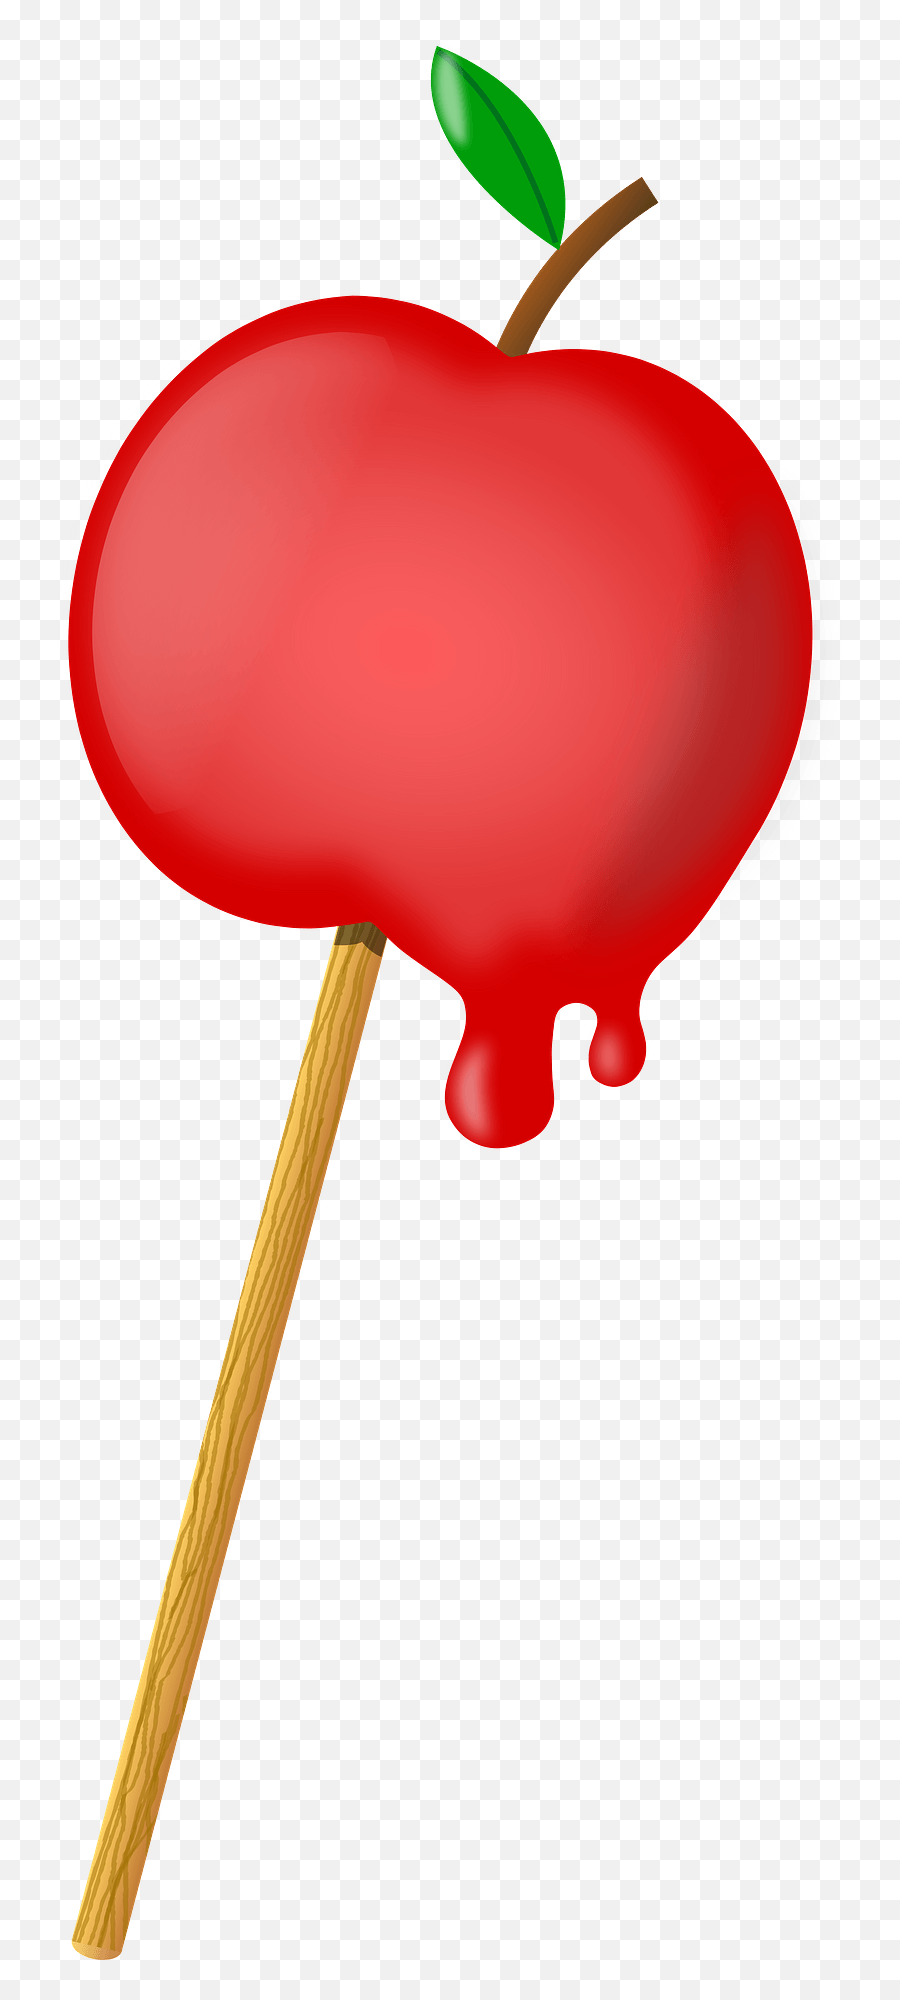 Candy Coated Apple - Candy Emoji,Candy Apple Emoji